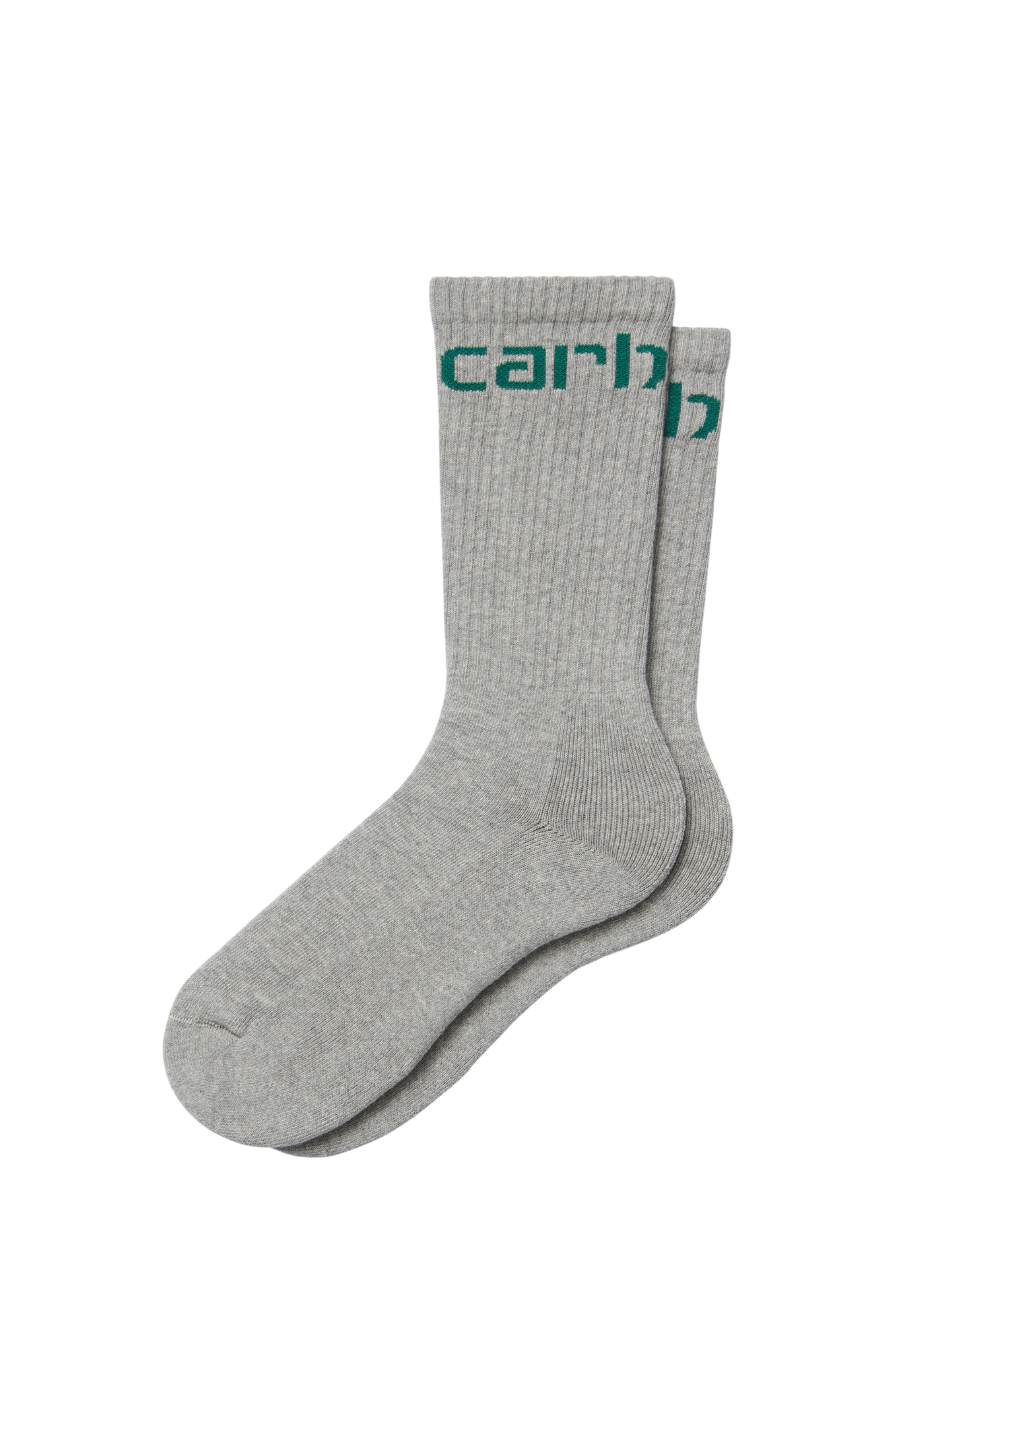 Carhartt WIP - Carhartt Socks - Grey Heather/Chervil - Hardpressed Print Studio Inc.